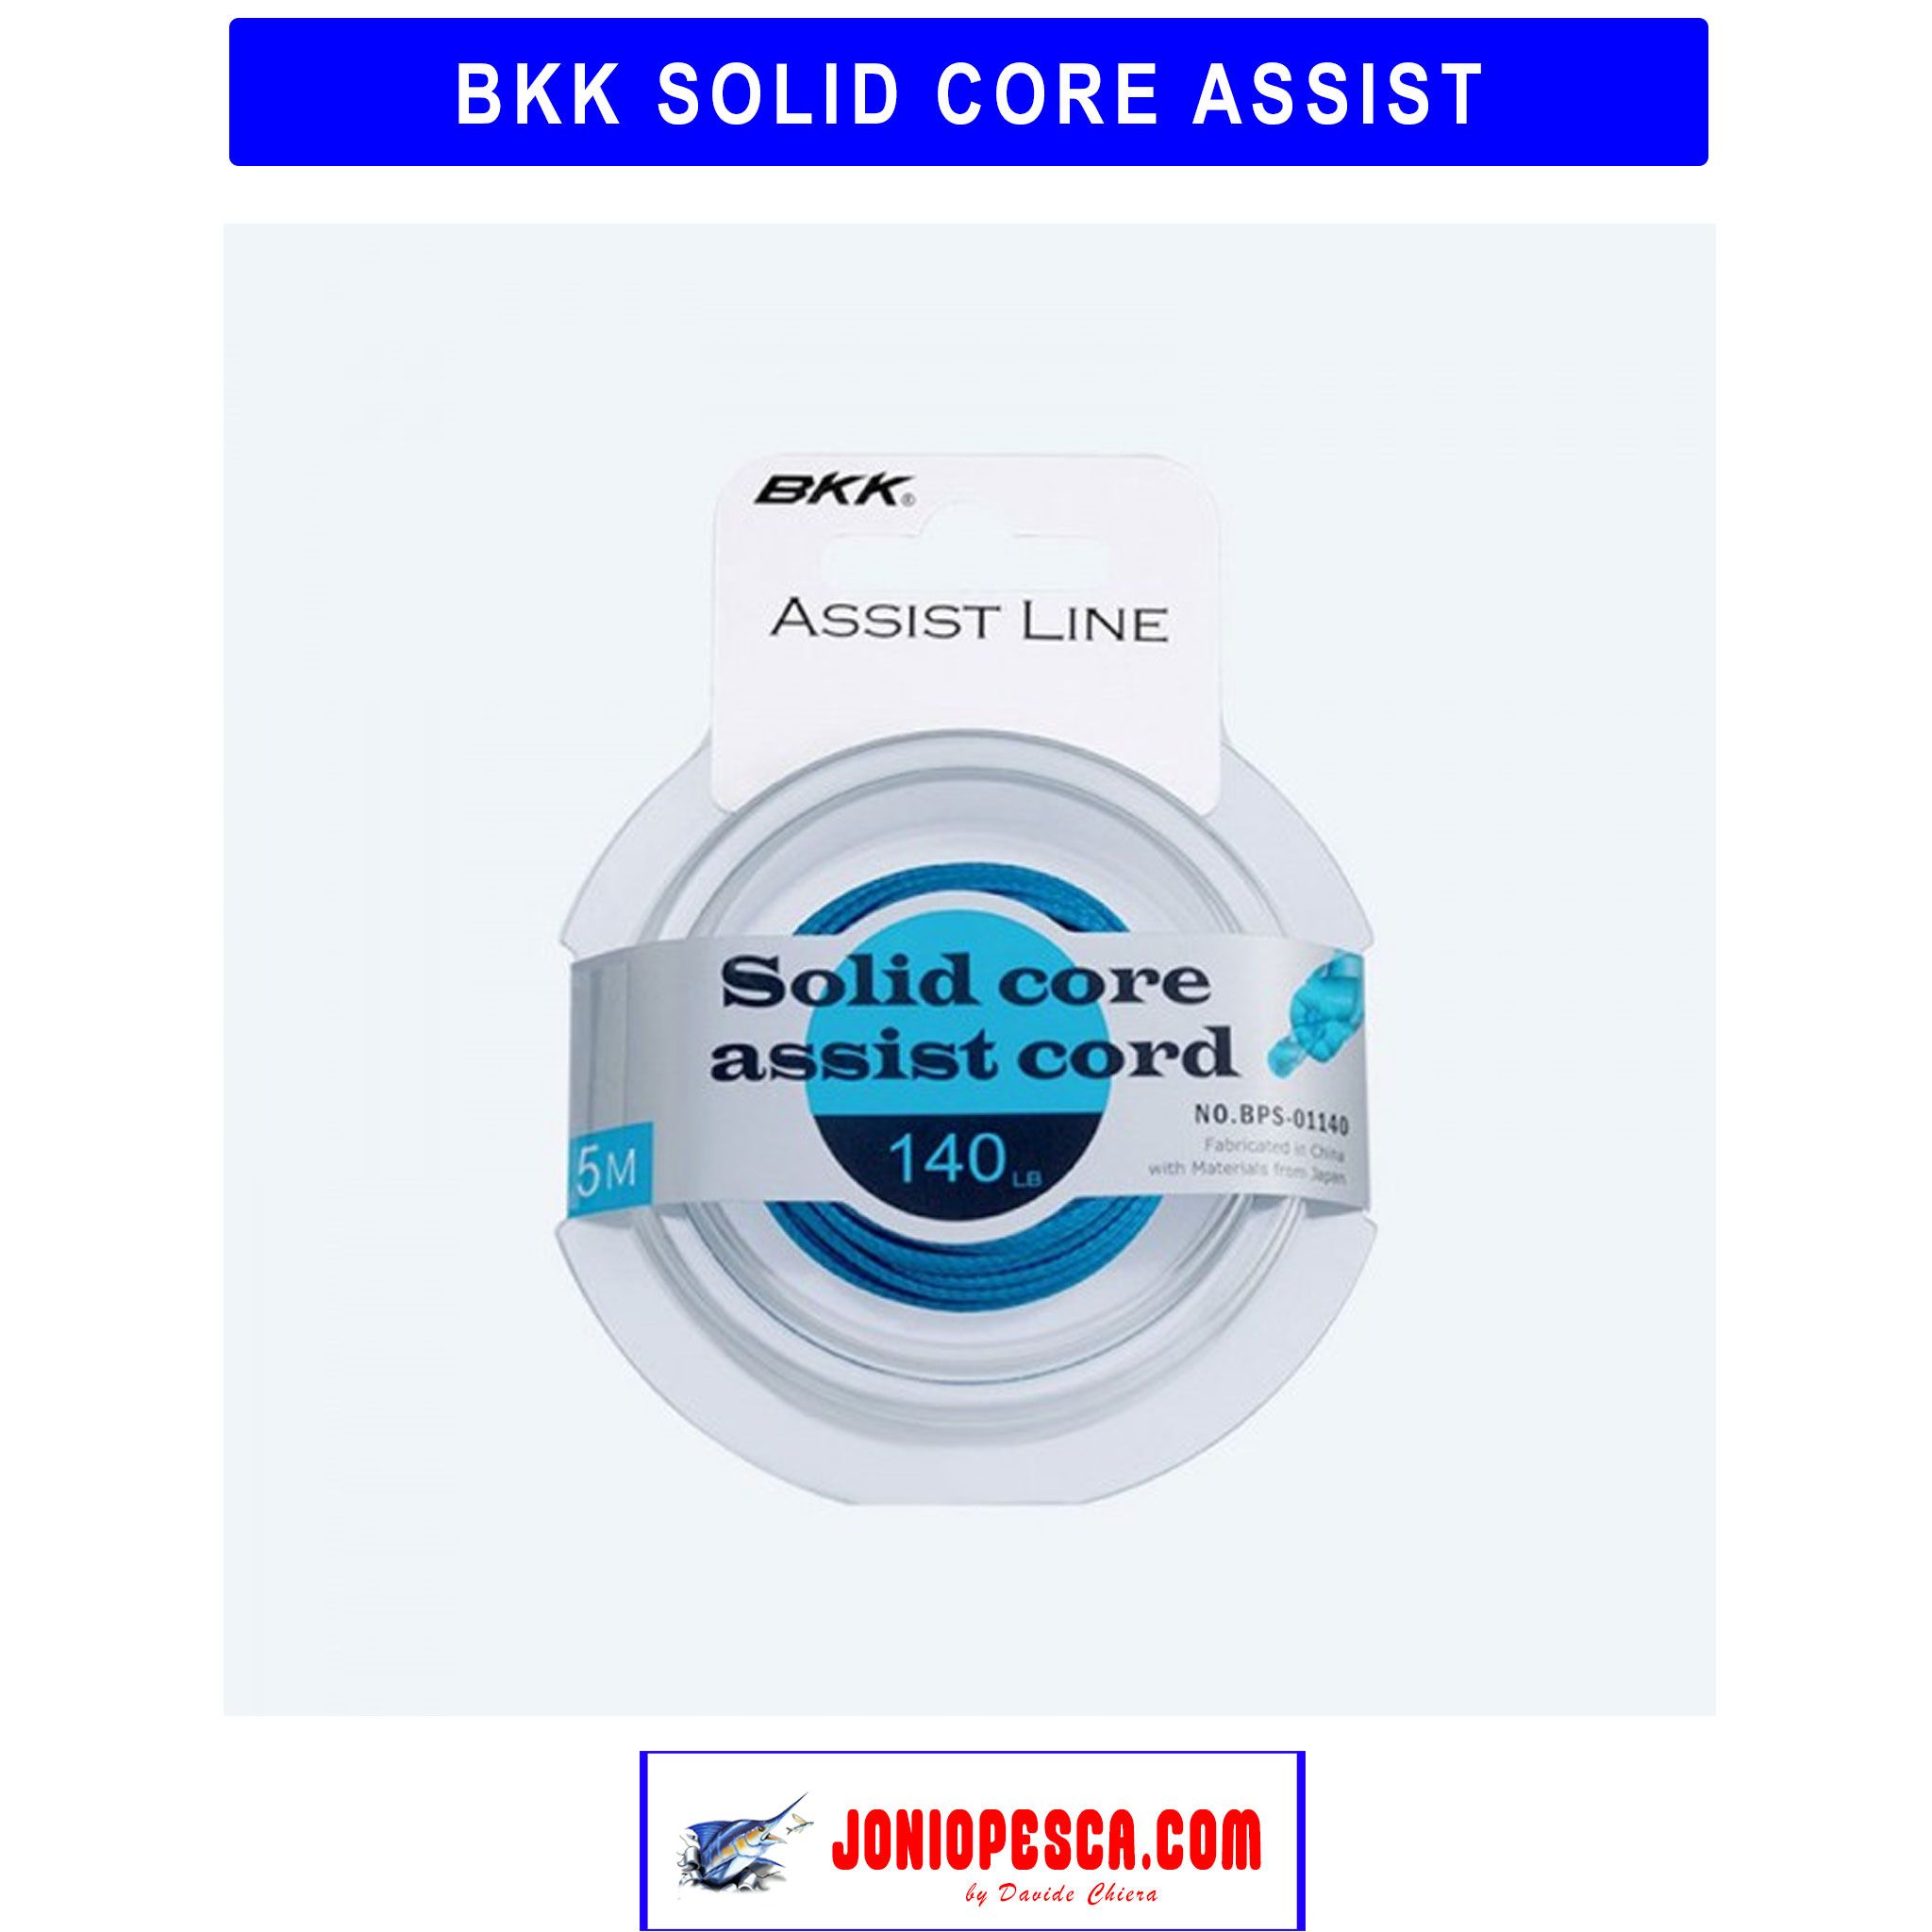 bkk-solid-core-assist